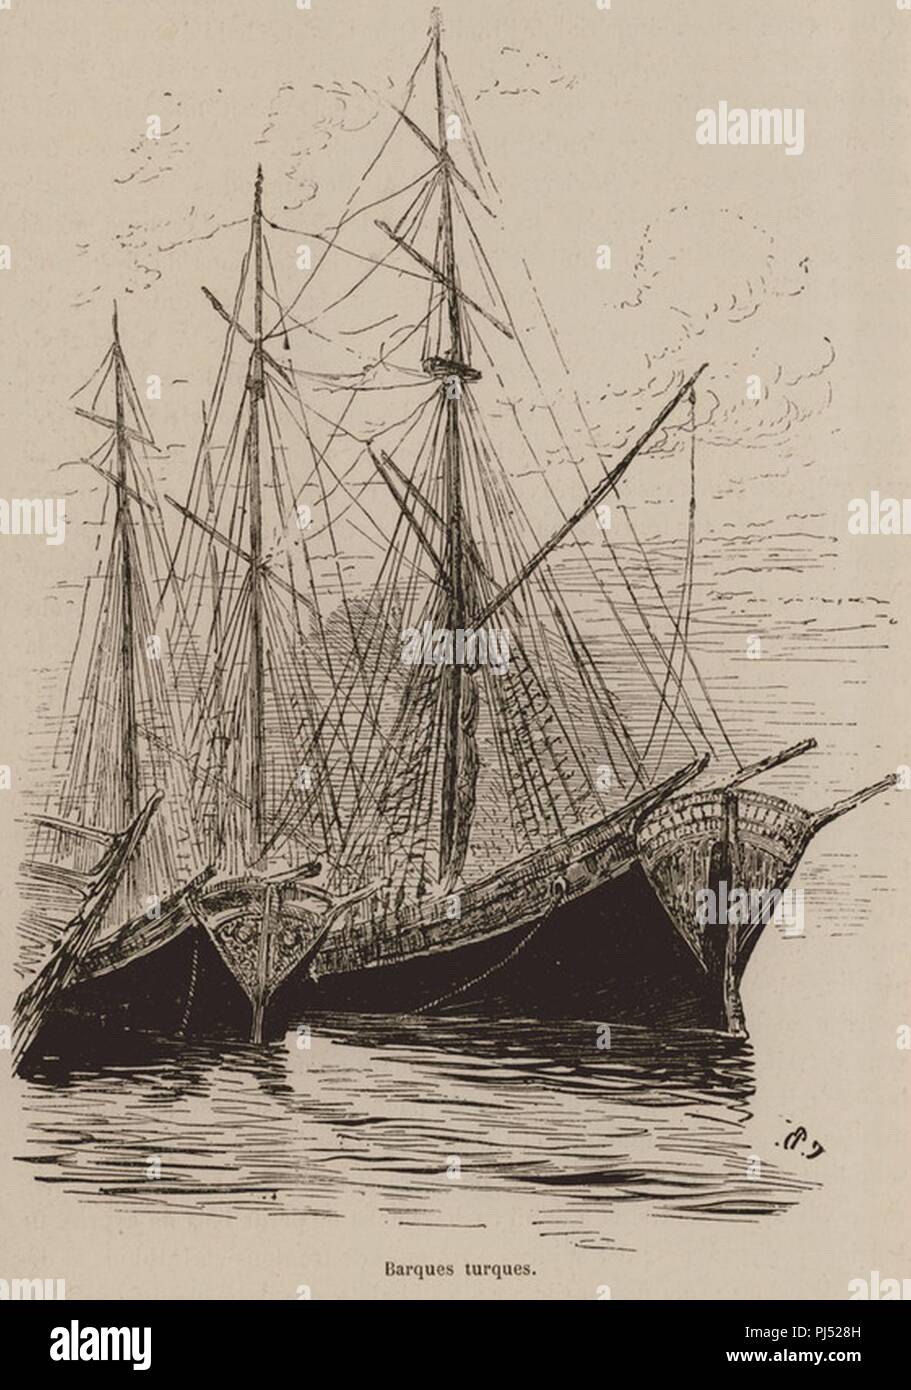 Barques turques - De Amicis Edmondo - 1883. Stock Photo